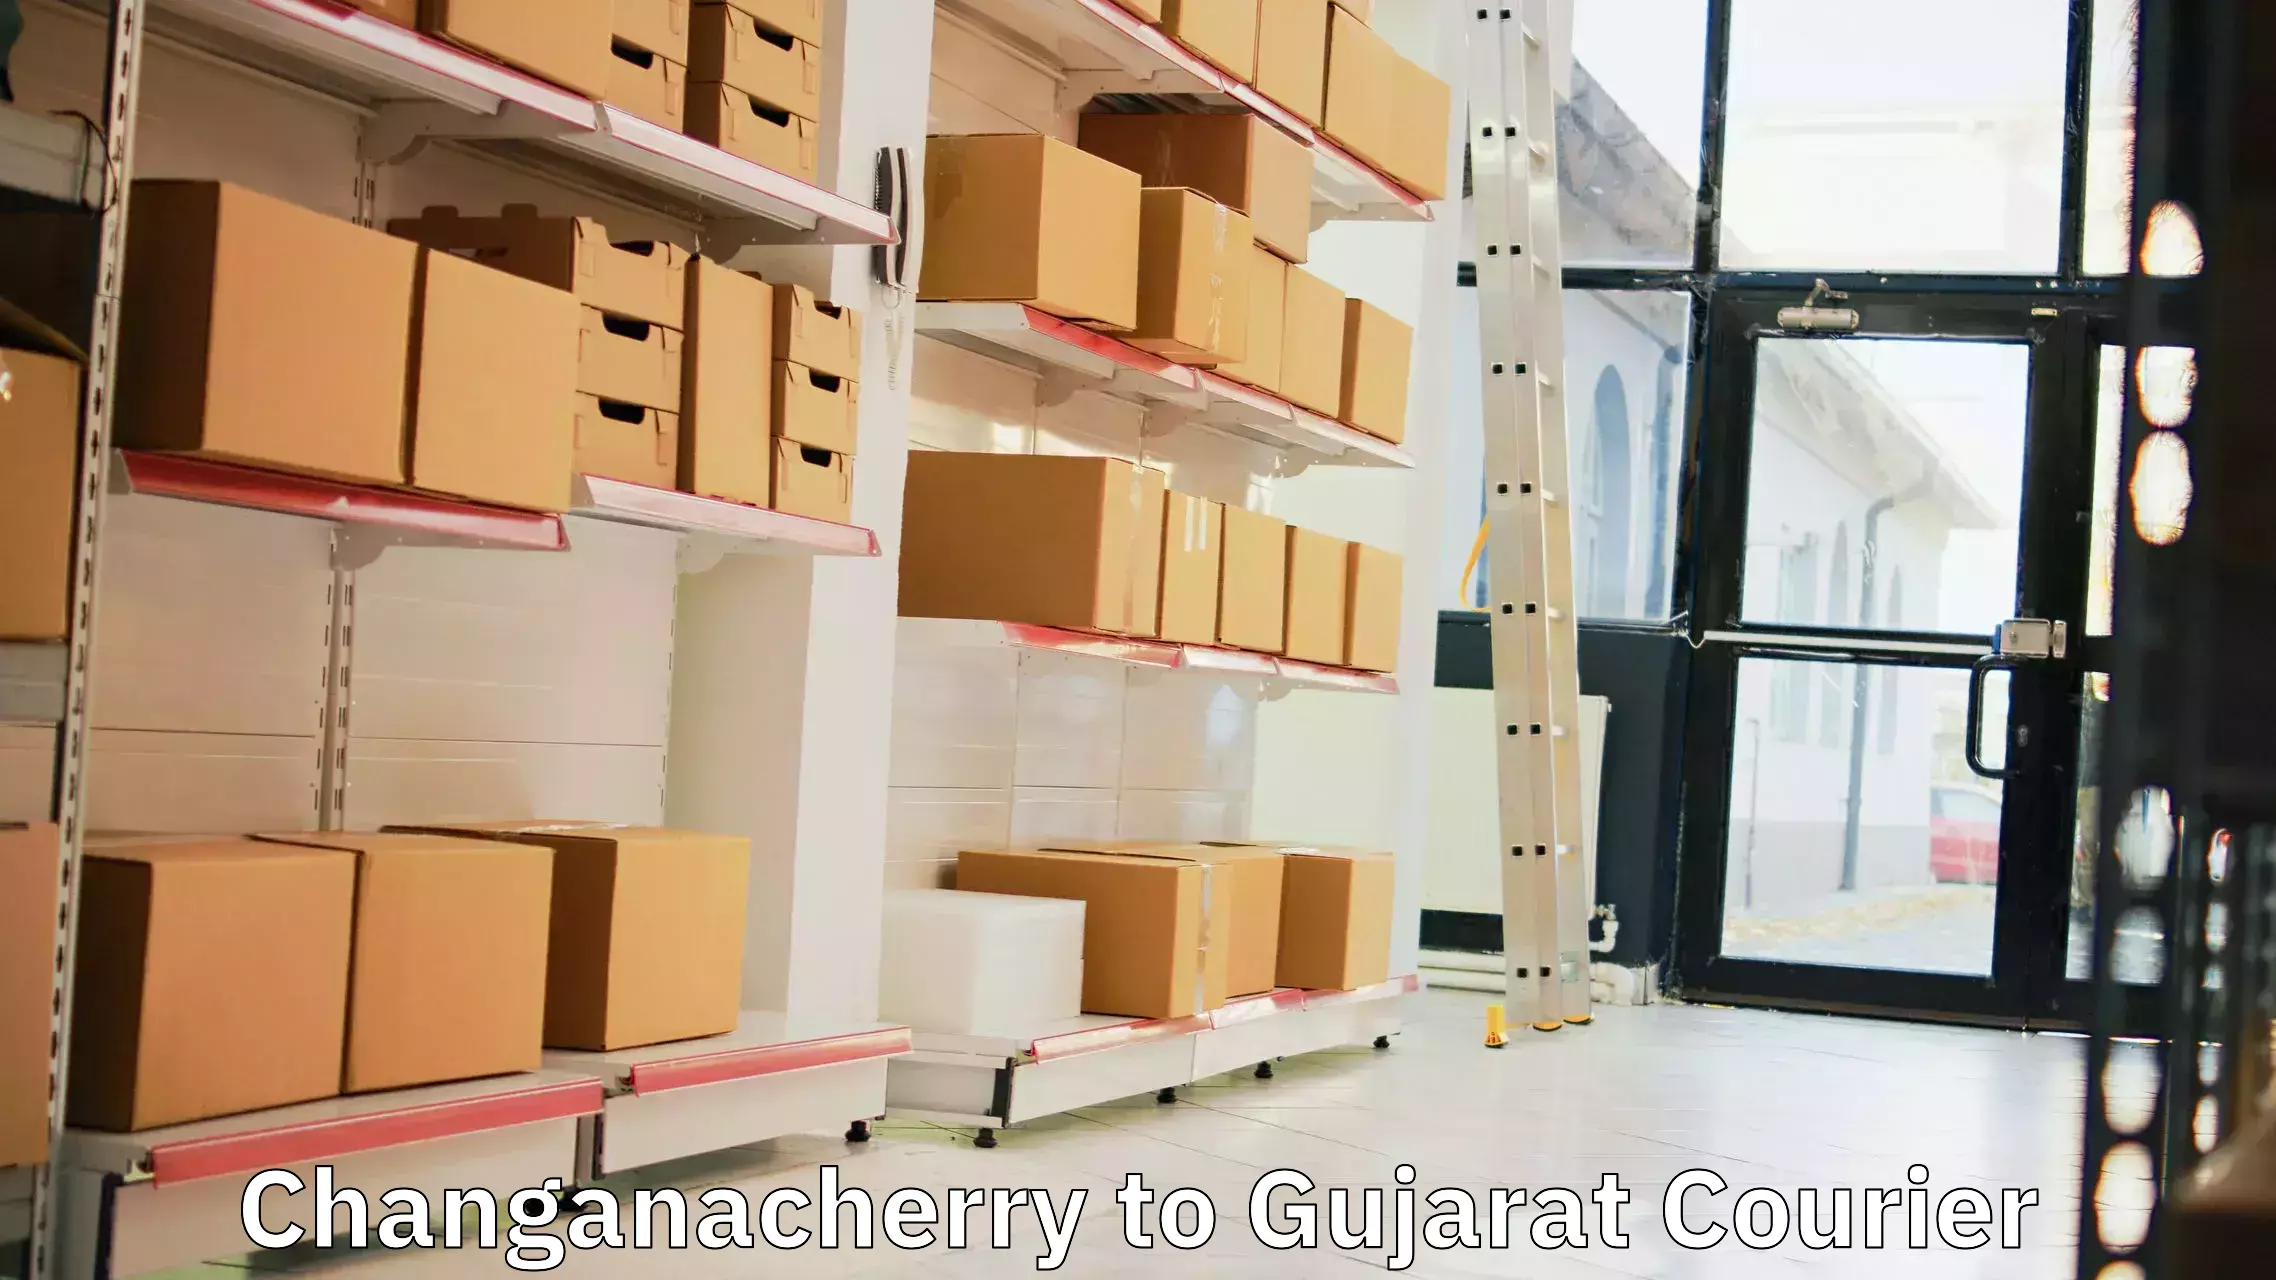 Cargo delivery service Changanacherry to GIDC